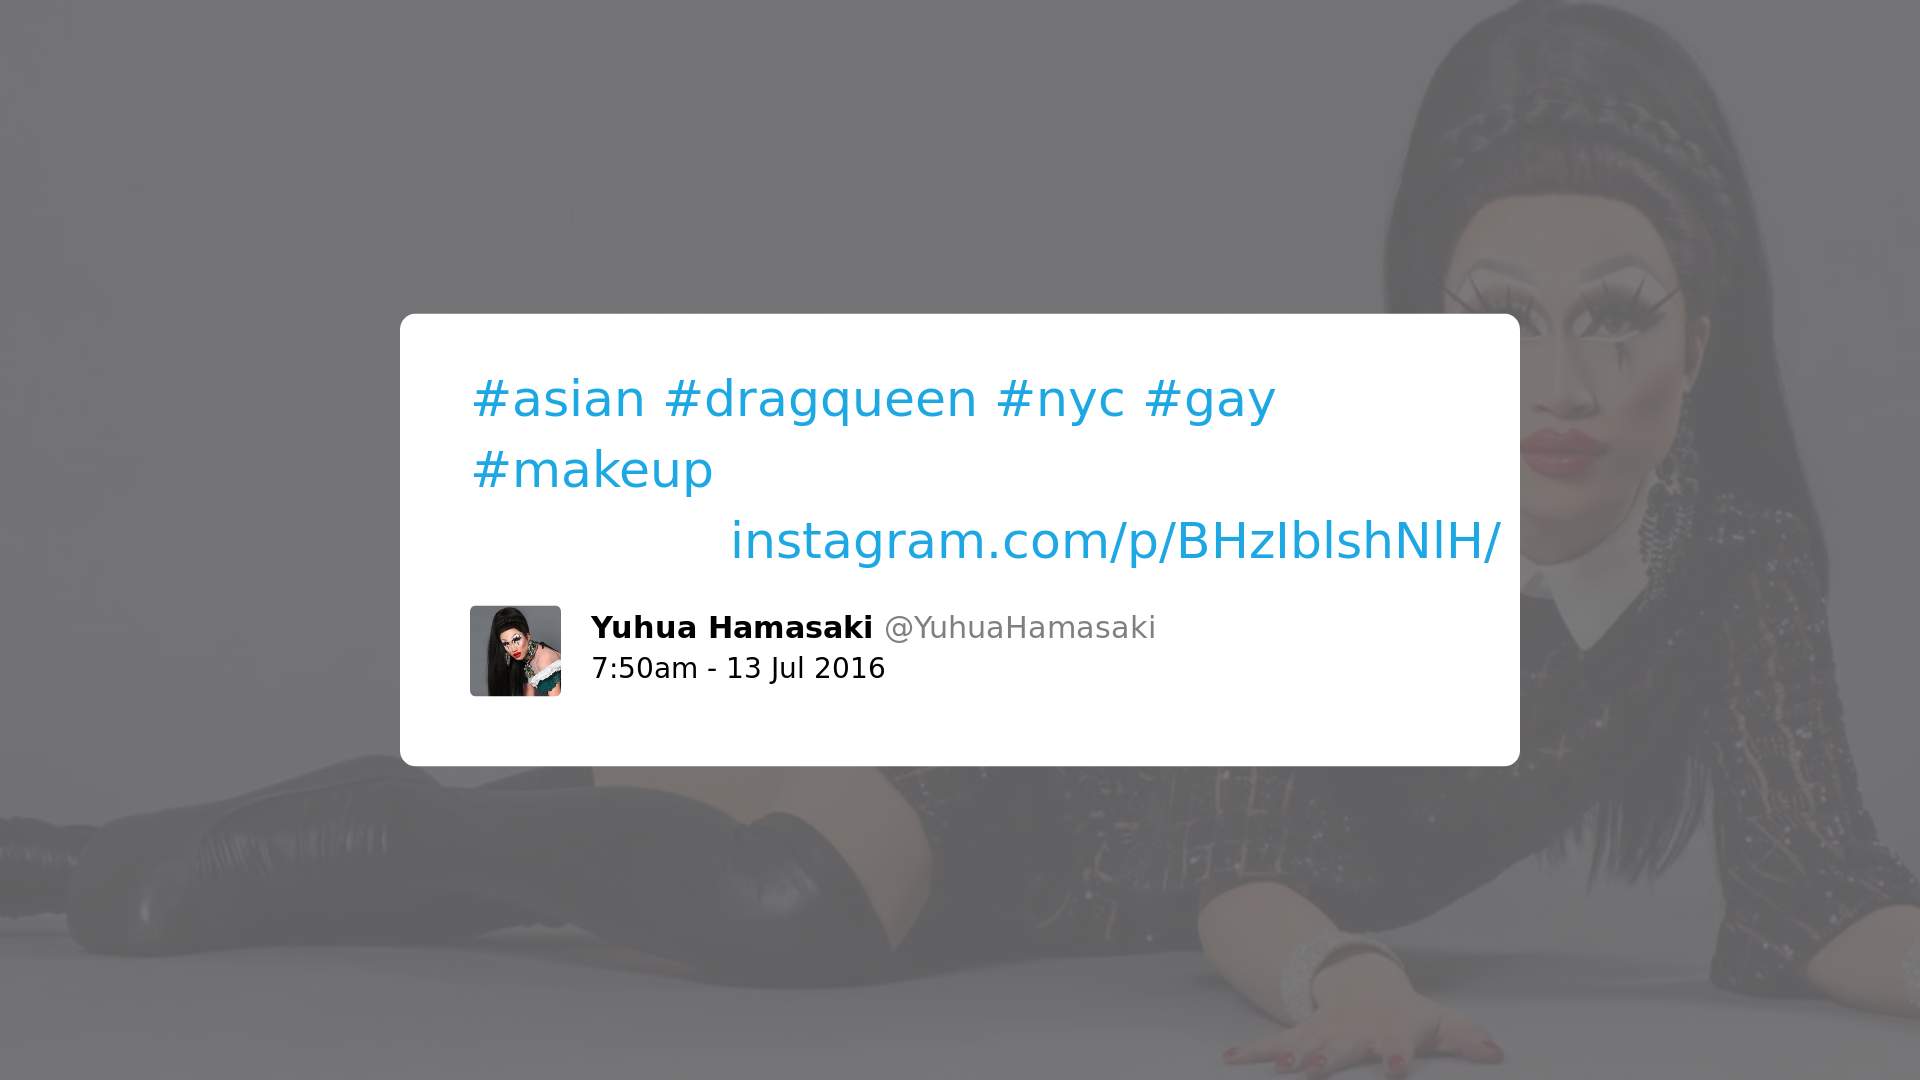 Print screen de postagem de Yuhua Hamasaki com o texto: #asian #dragqueen #nyc #gay #makeup instagram.com/p/BHzIblshNIH/